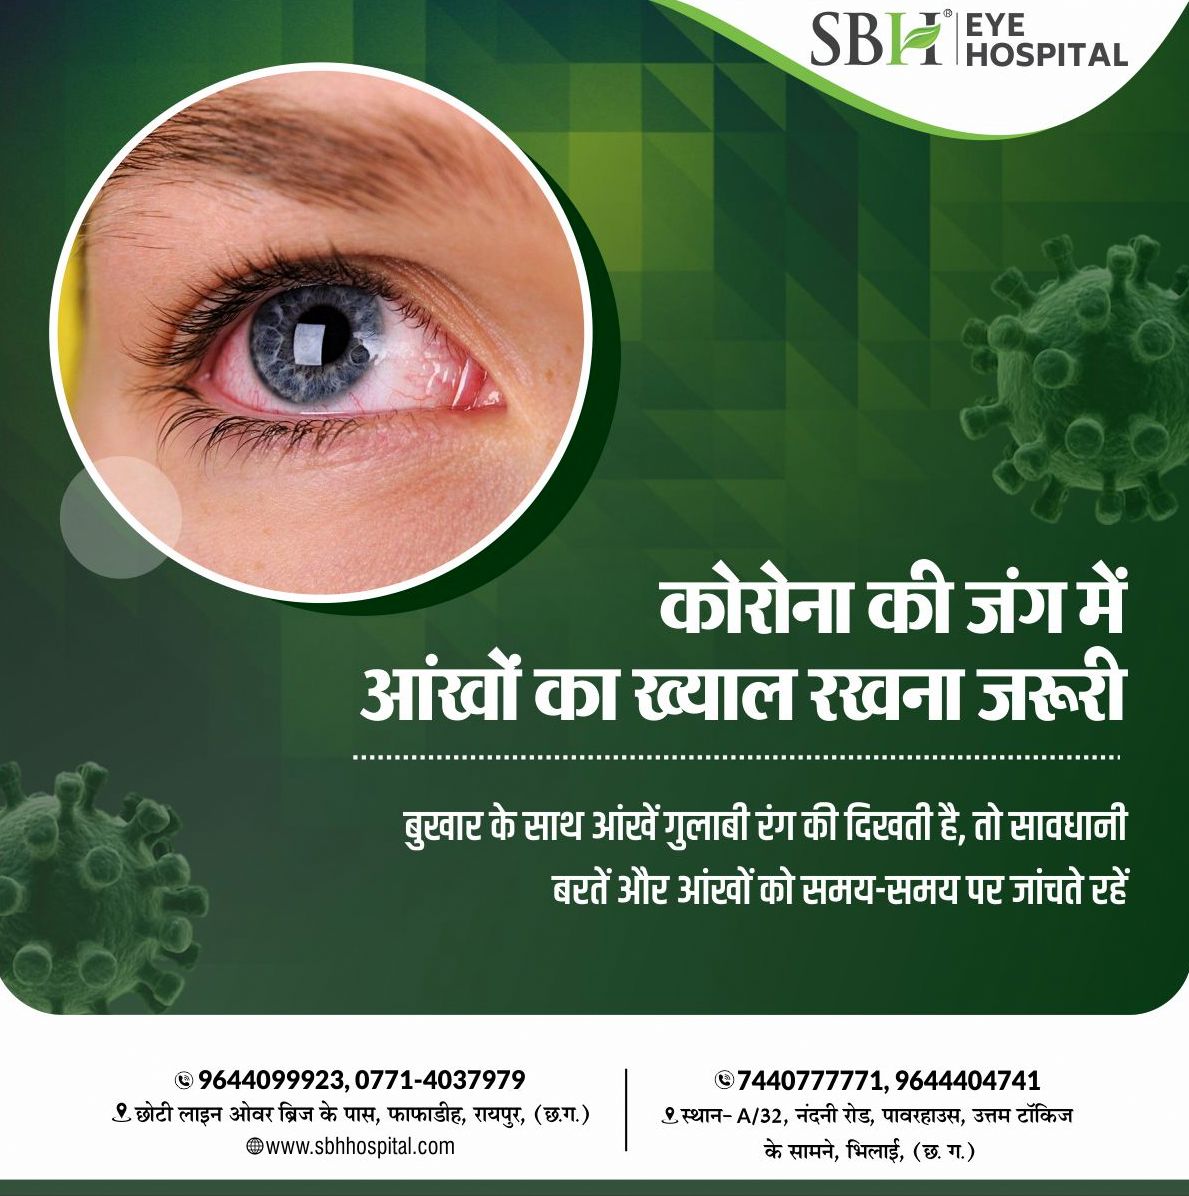 Sai Baba Eye Hospital|Hospitals|Medical Services